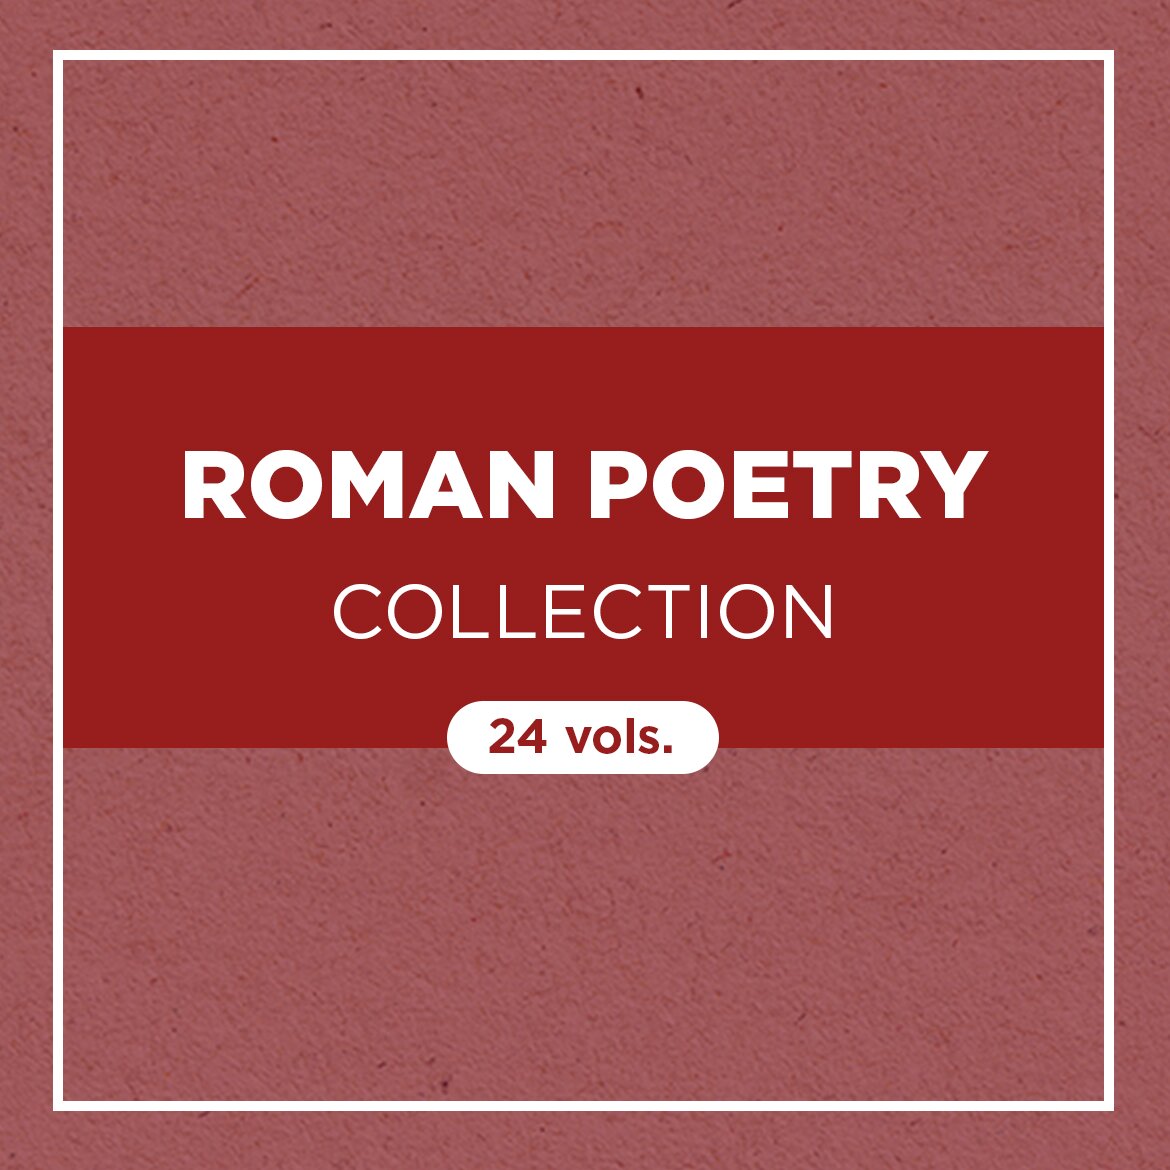 Roman Poetry Collection (24 vols.)